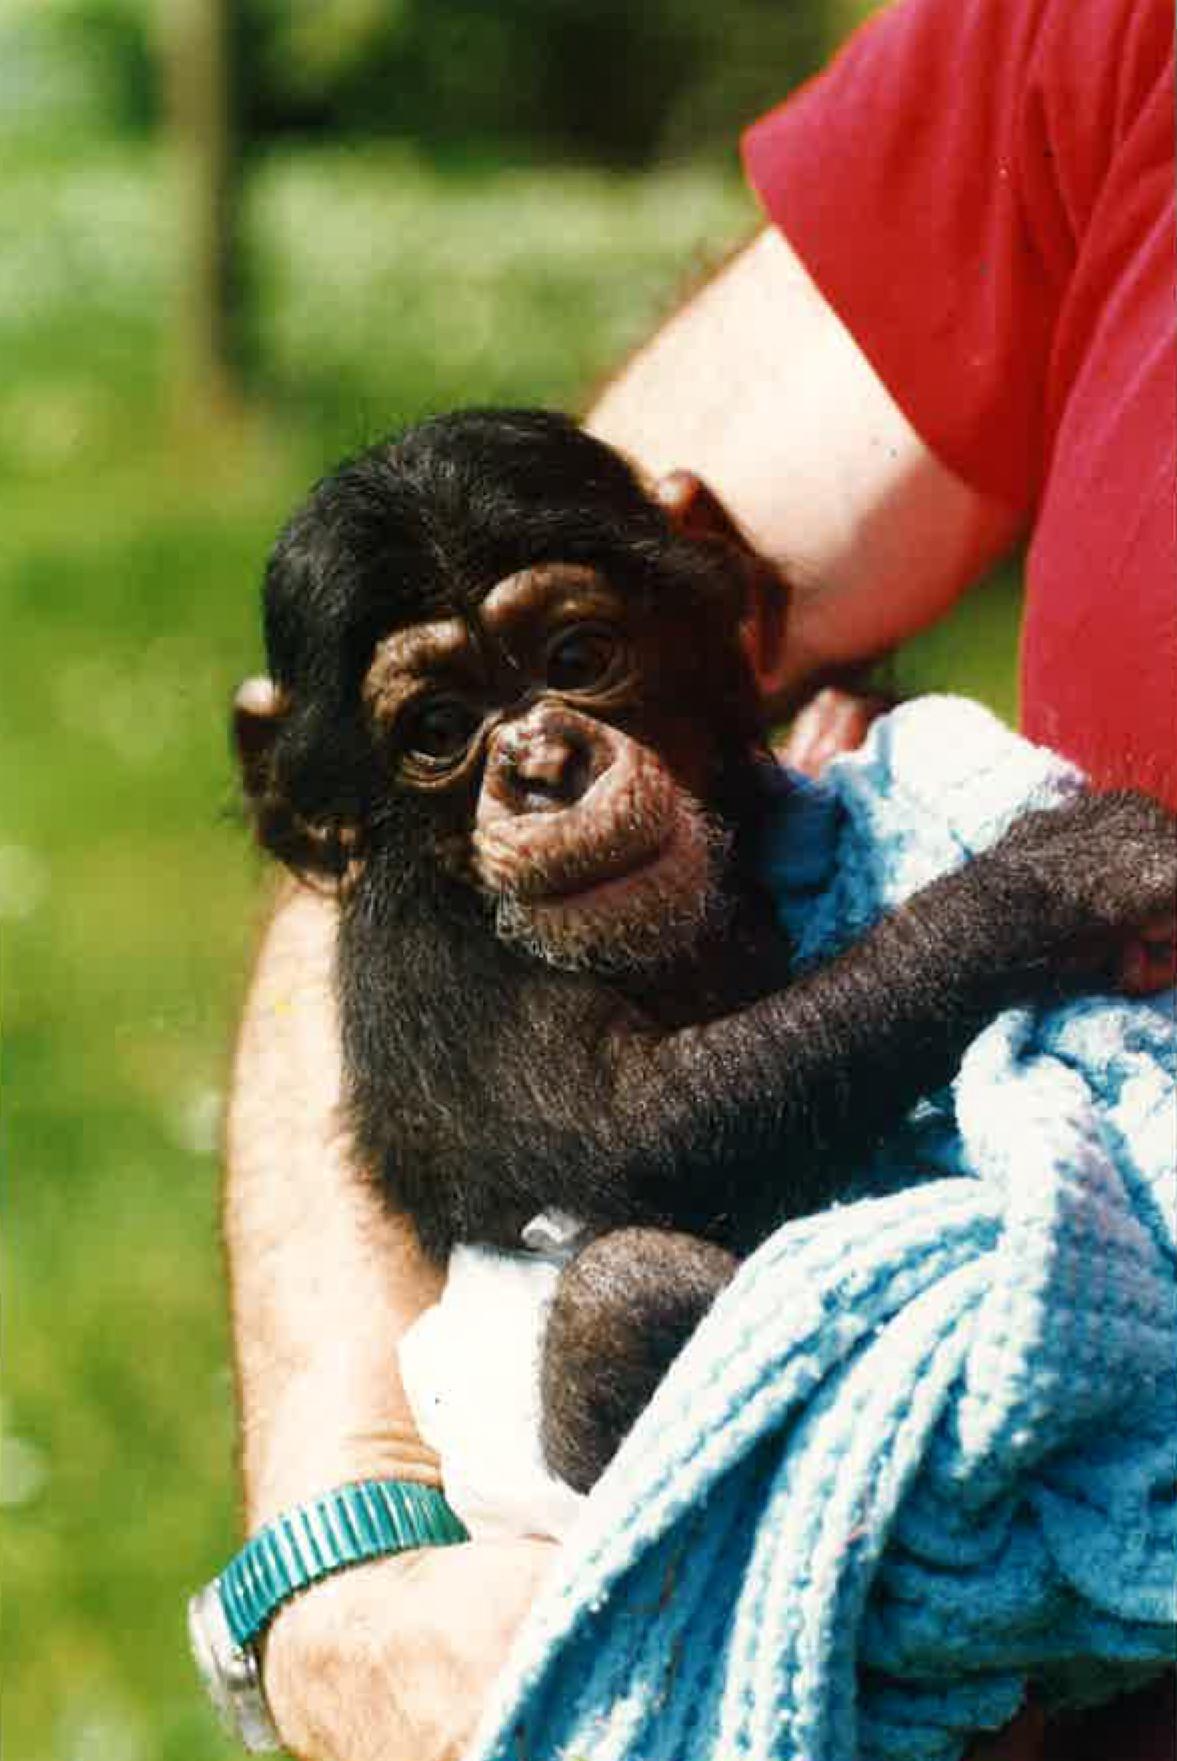 Monkey world in 1994